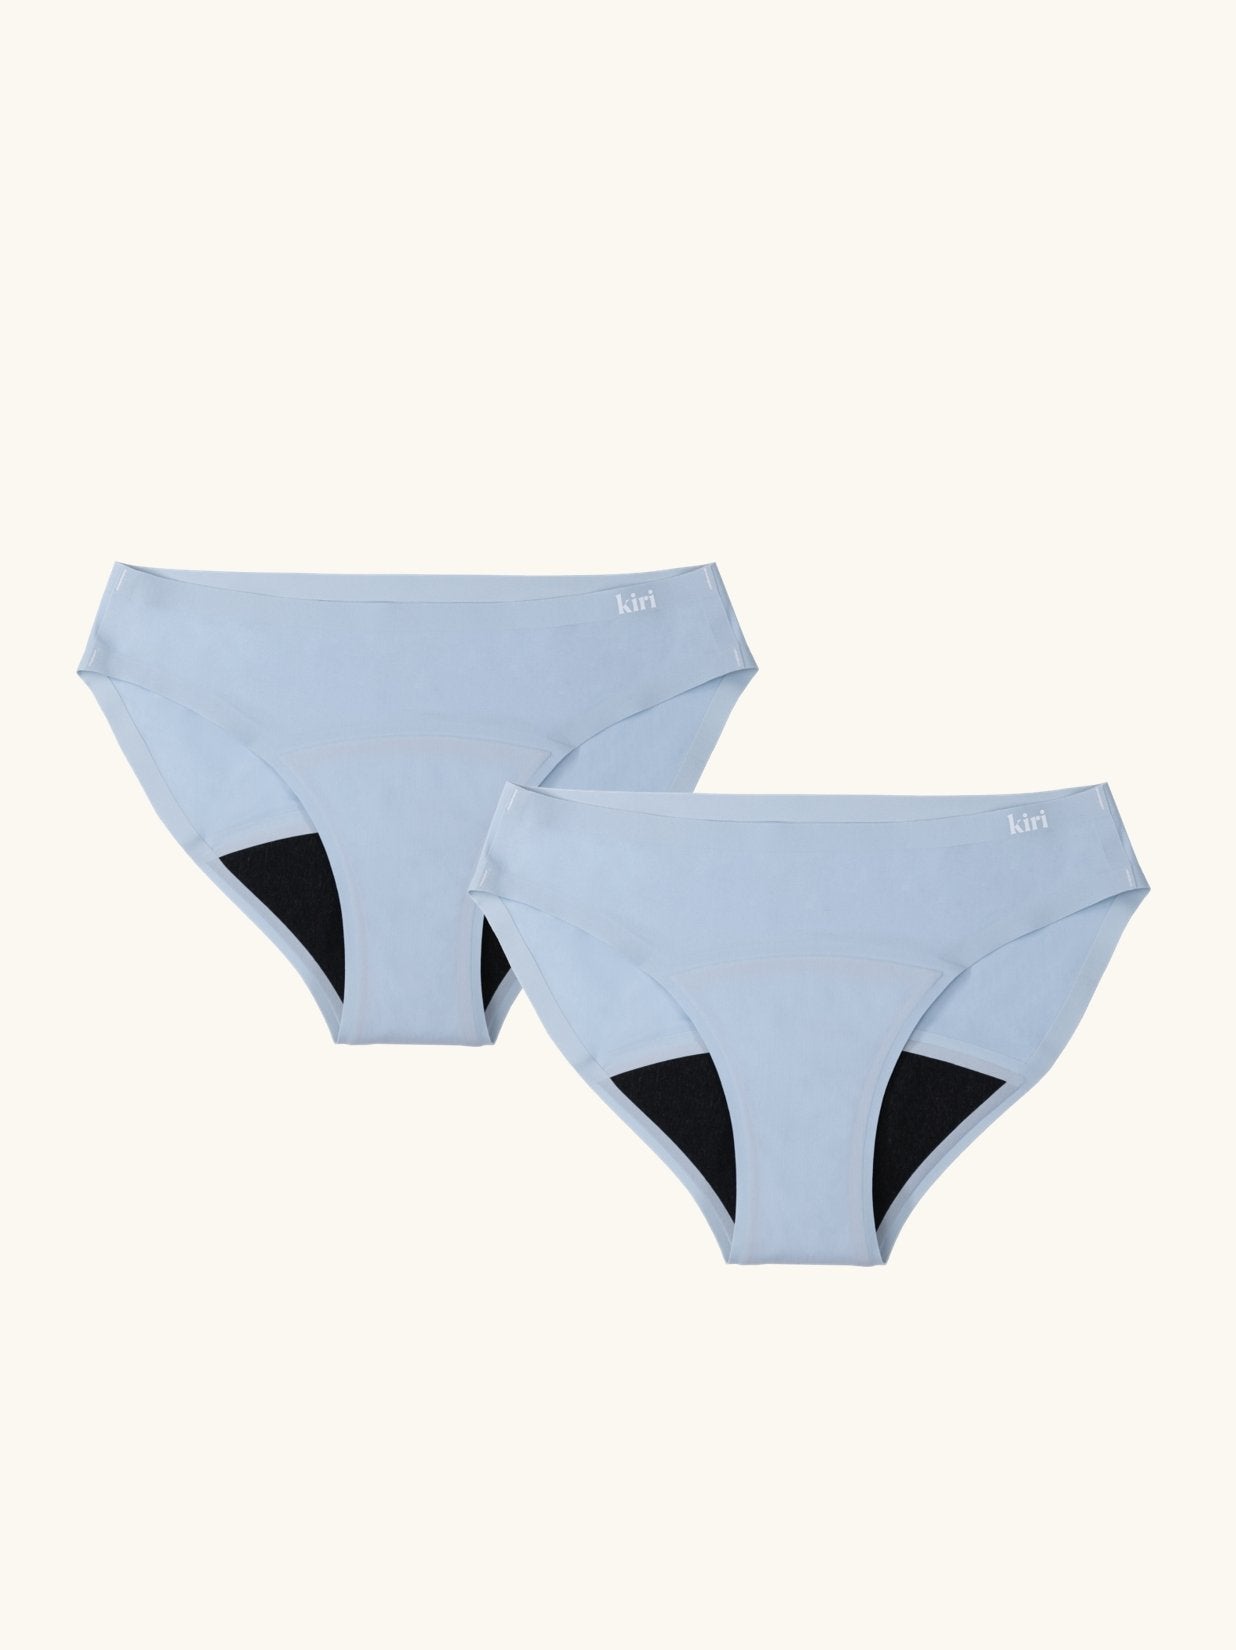 Kiri Daywear Panties Bundle Set